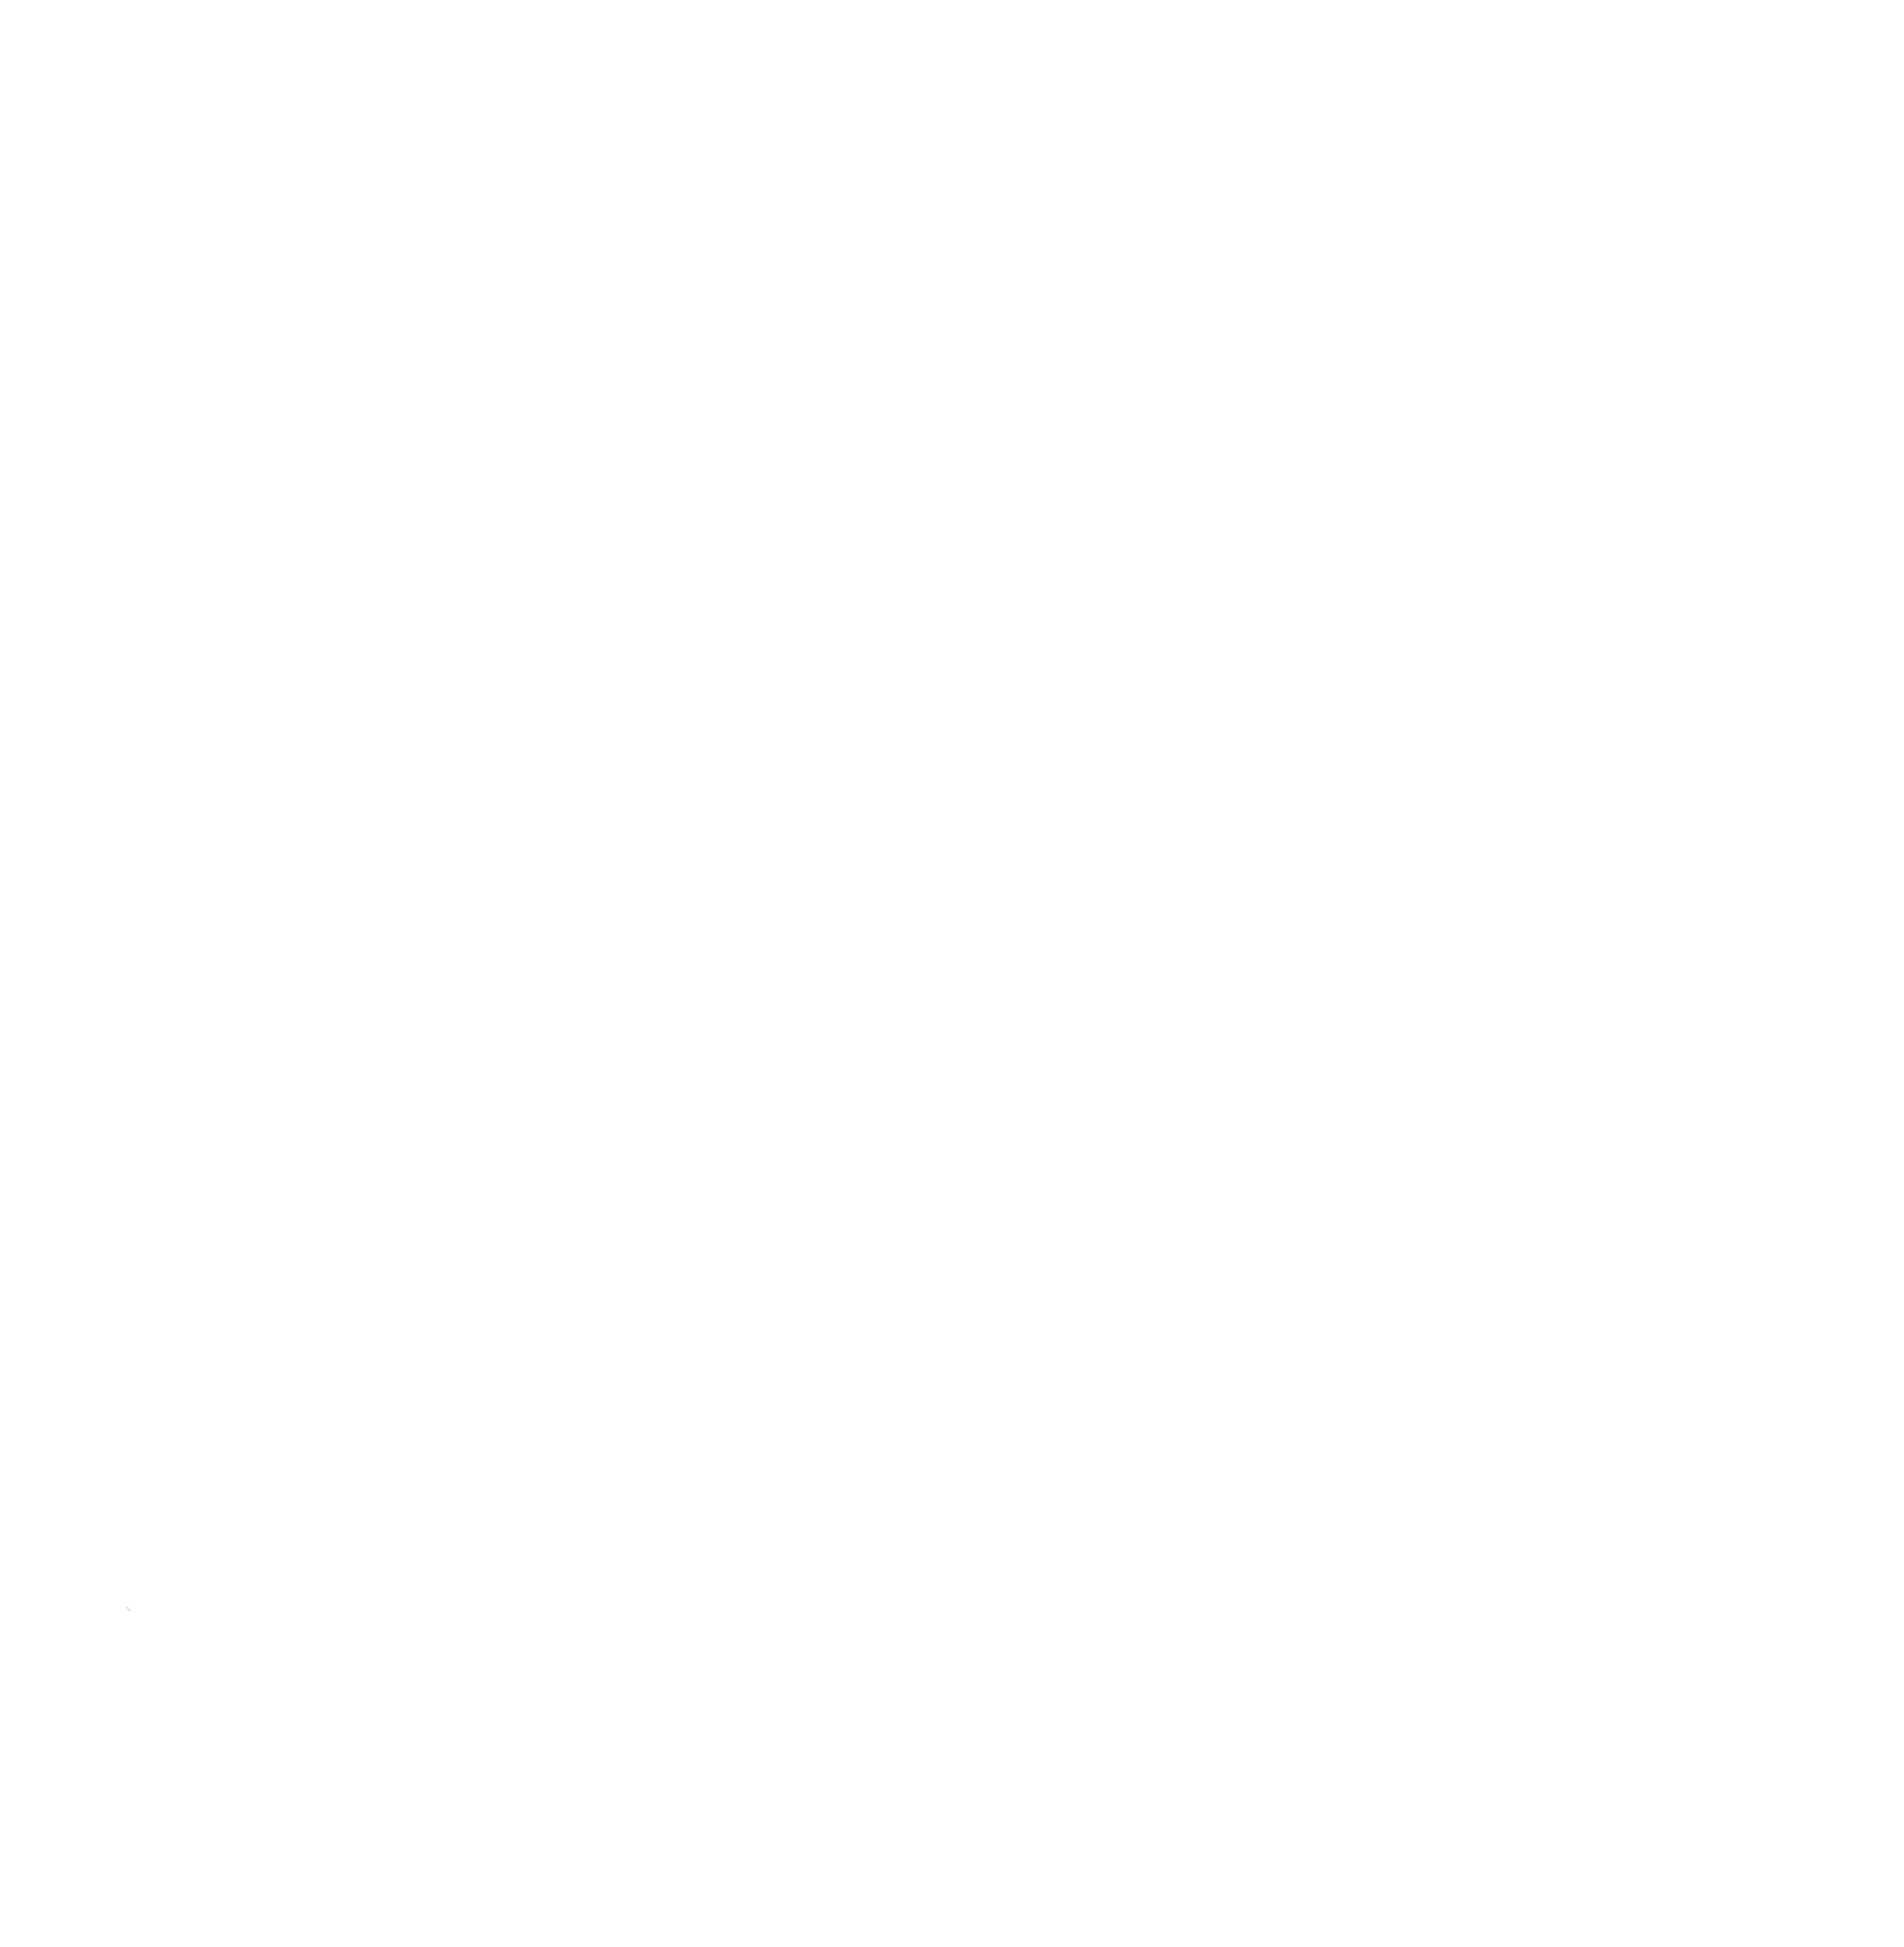 Contact-form-logo